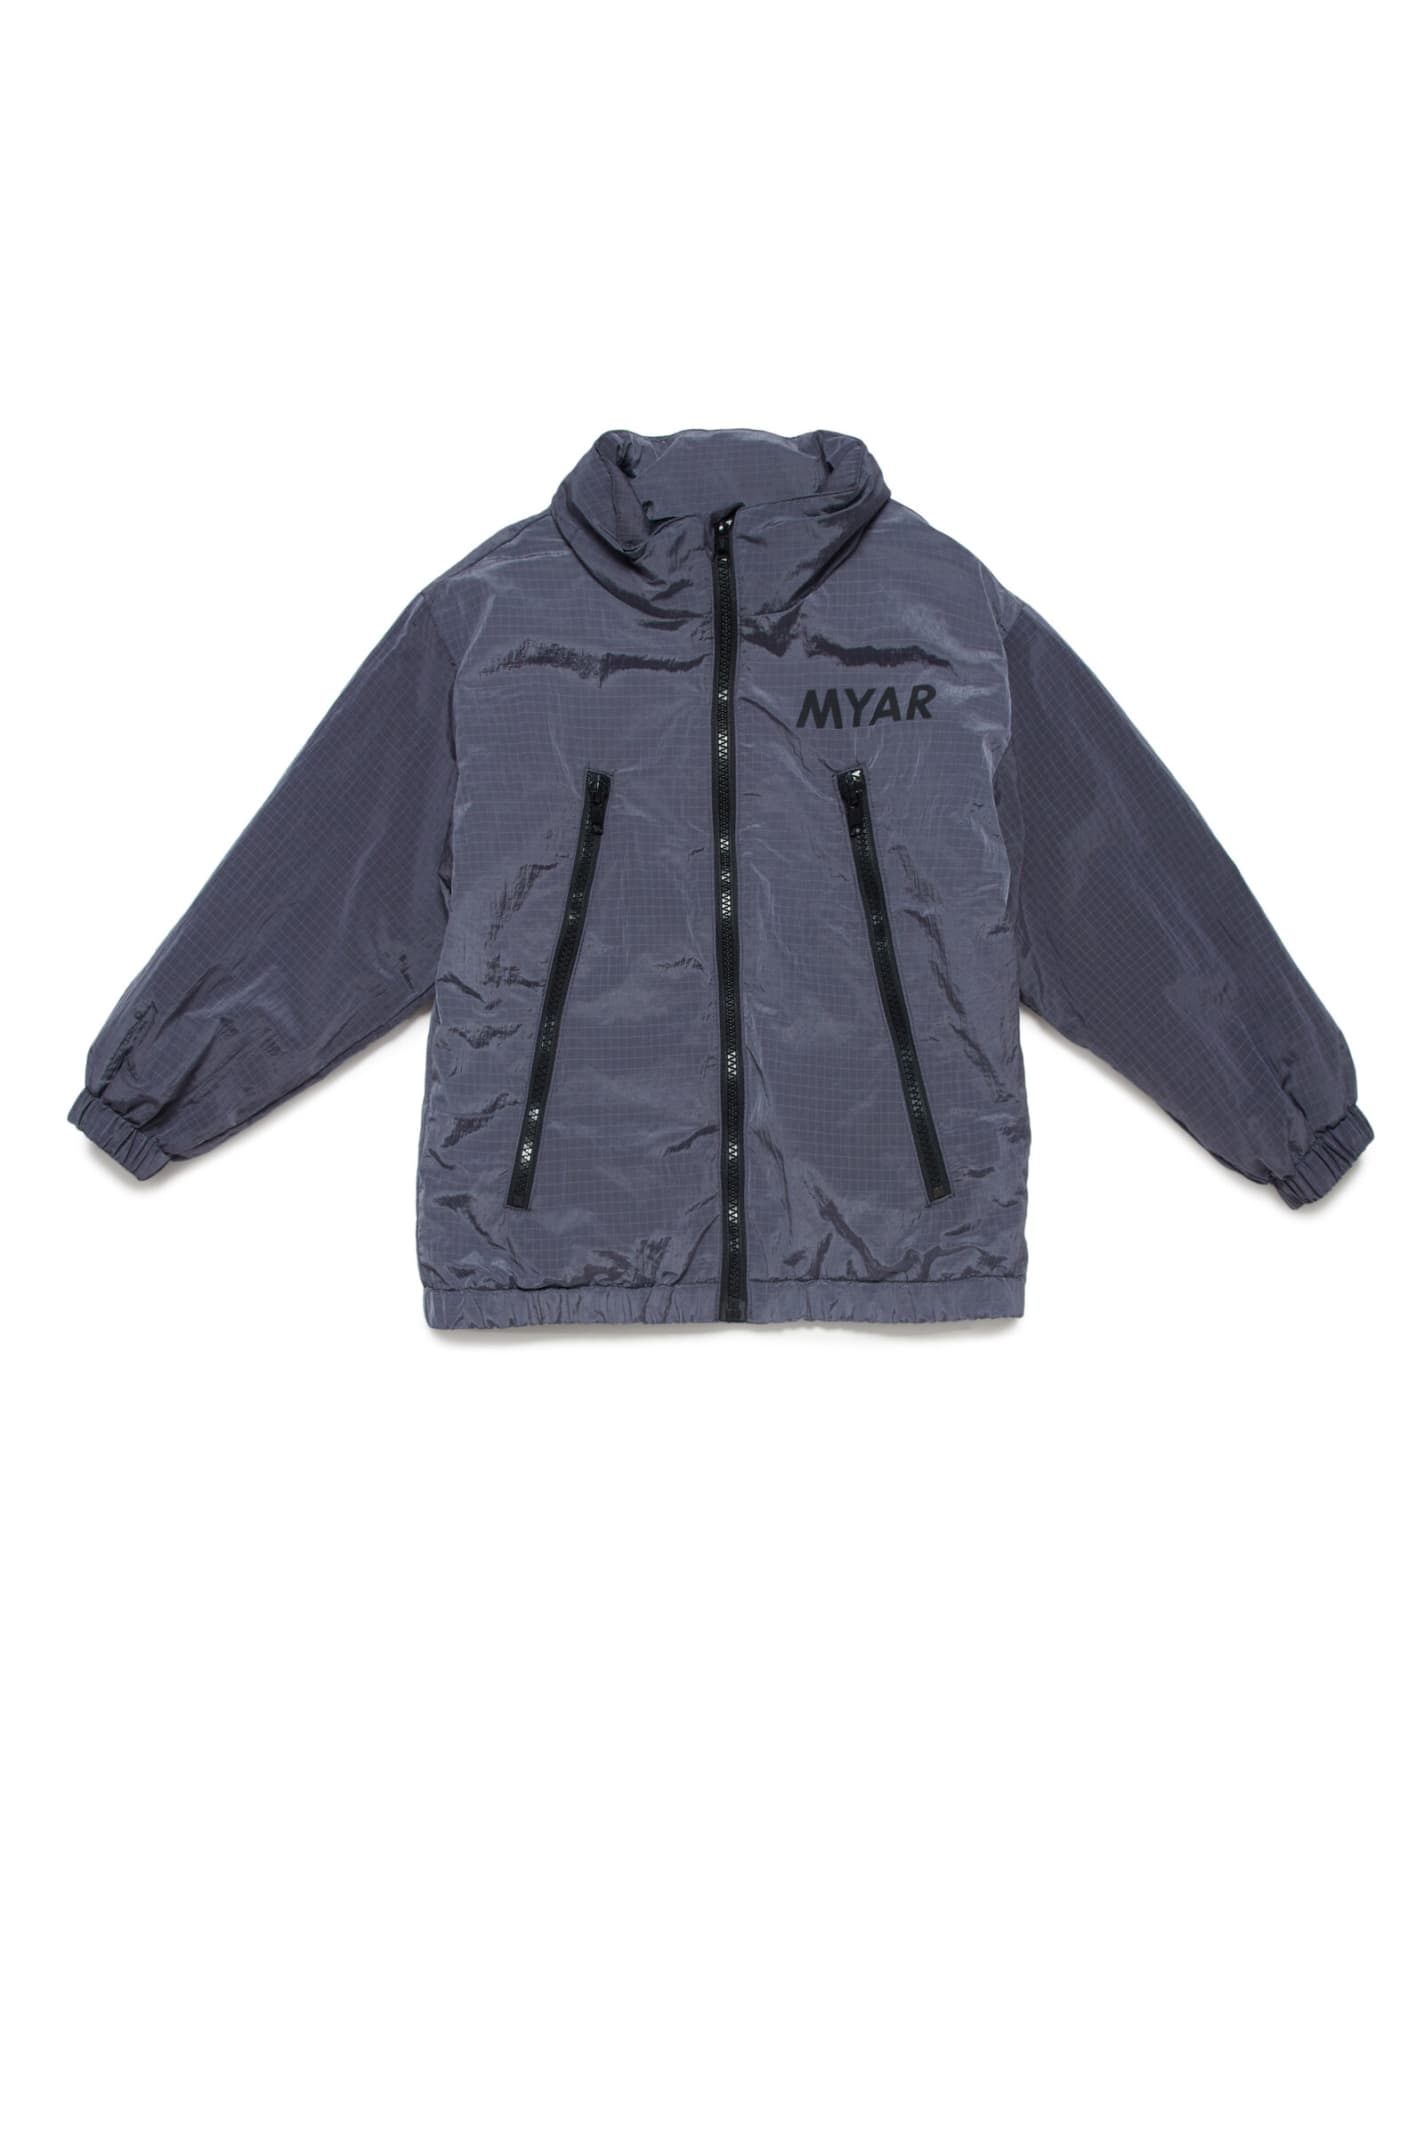 MYAR Myj15u Jacket Myar Deadstock Grey Ripstop Fabric Jacket With Concealed Hood